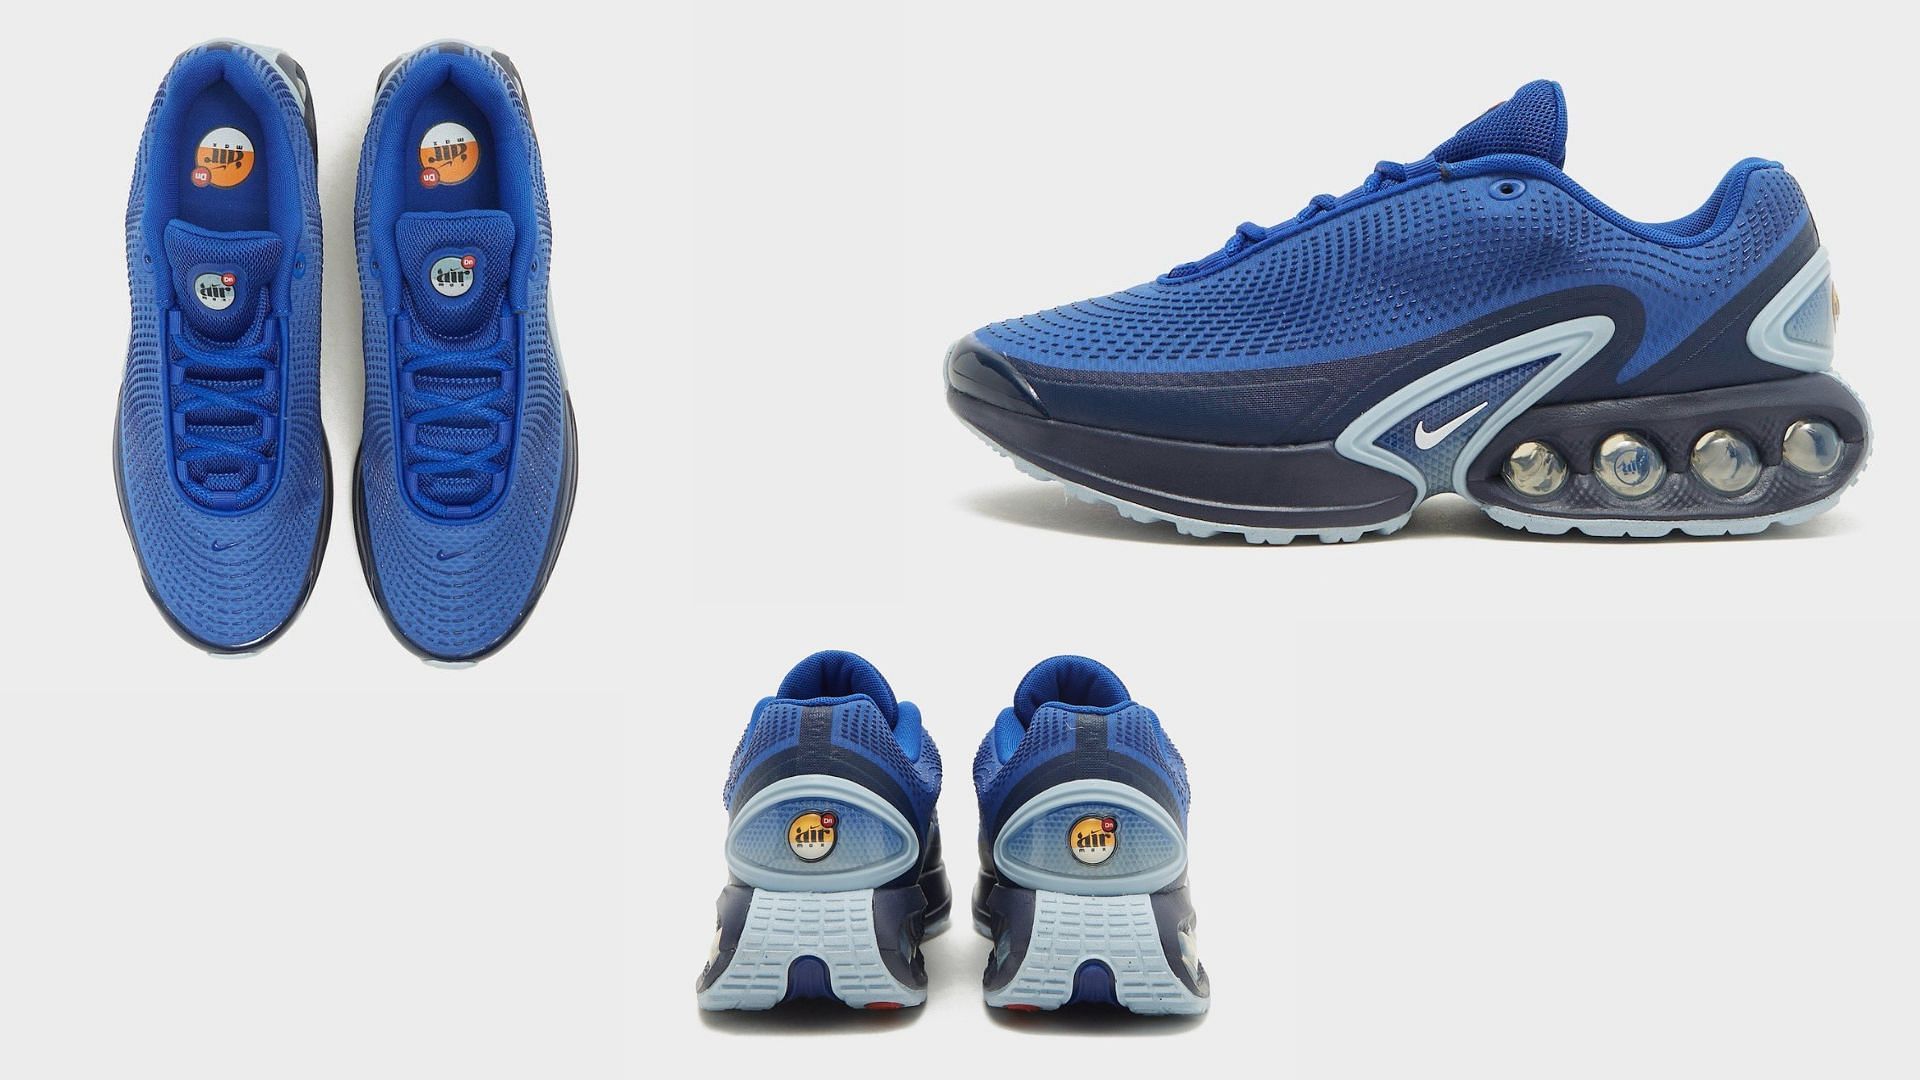 A closer look at the Nike Air Max Dn Hyper Blue shoes (Image via X/@33degres)